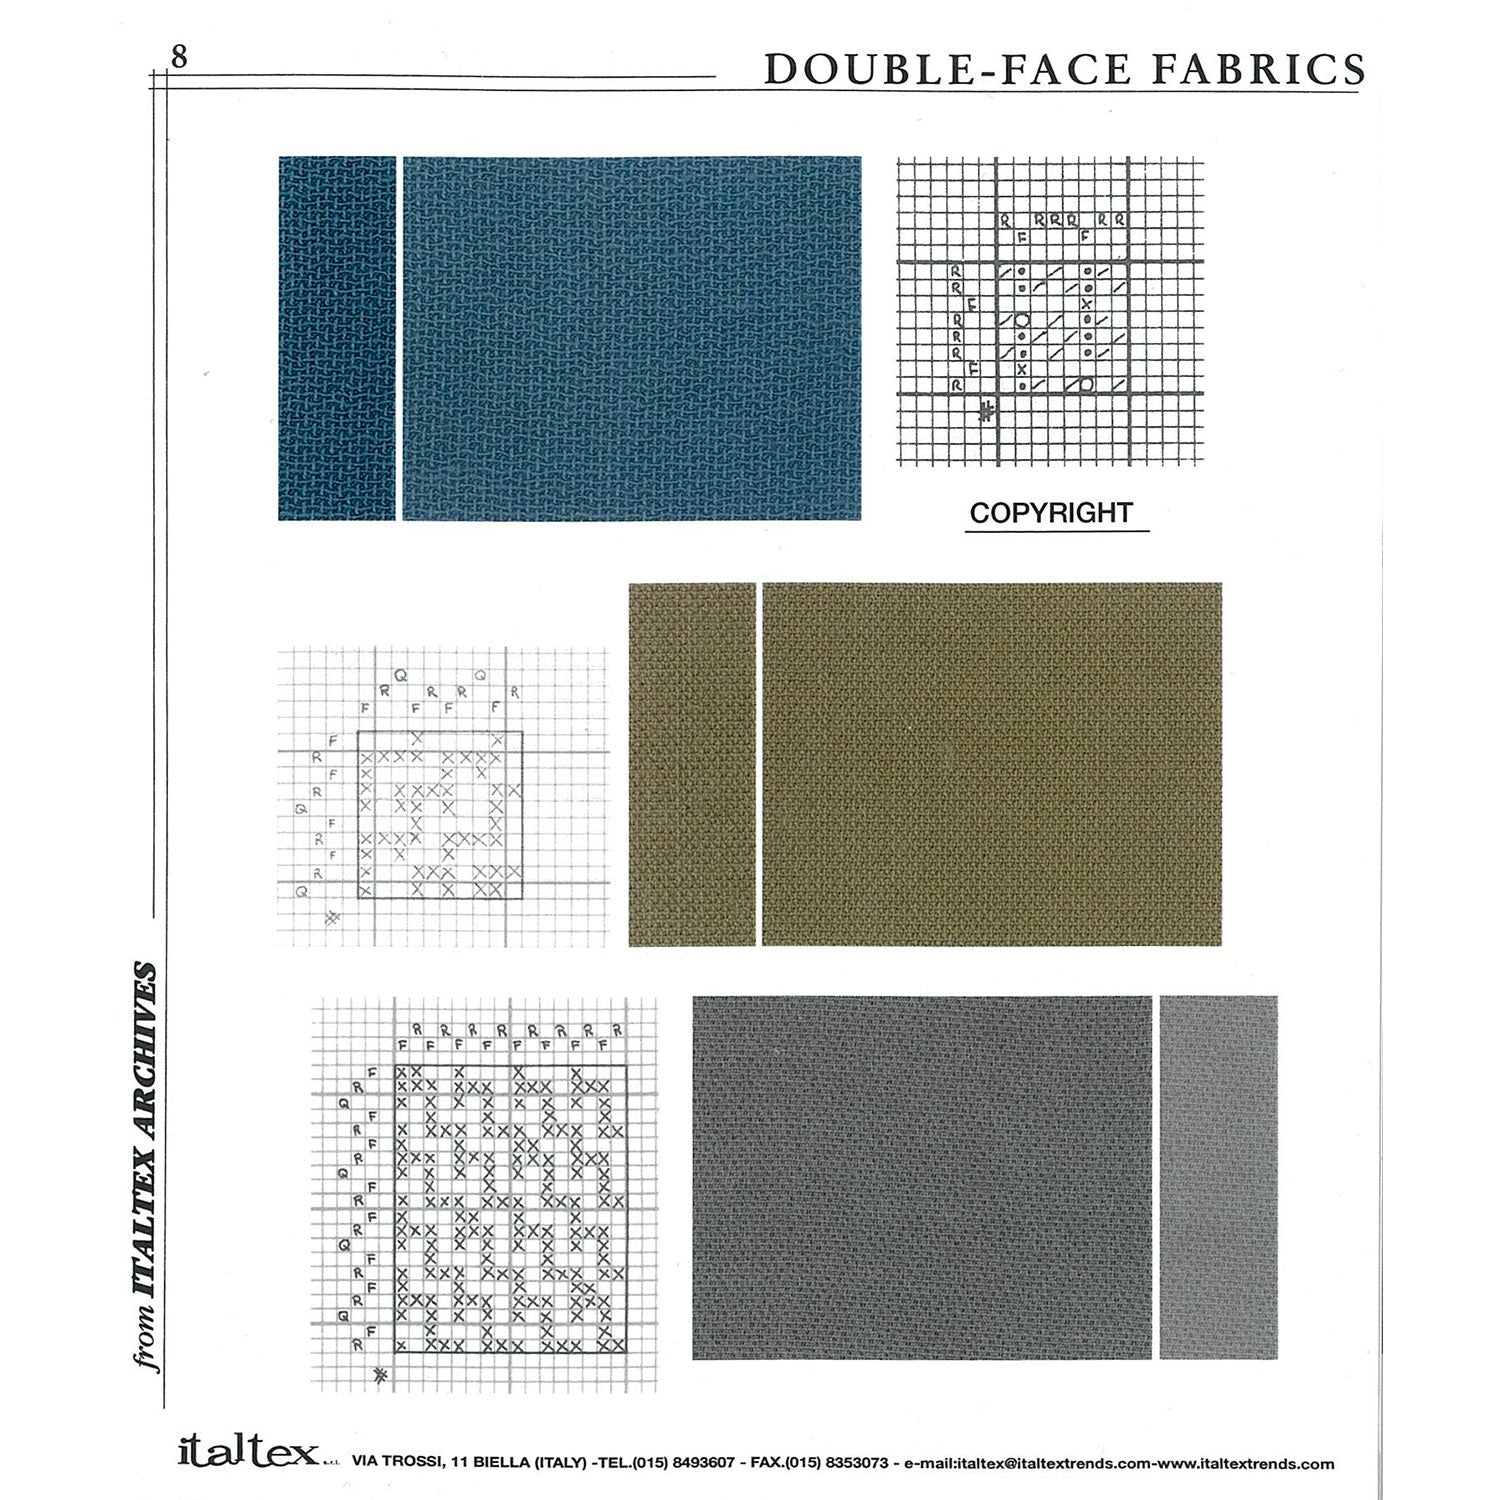 Double Face Fabrics Vol.3